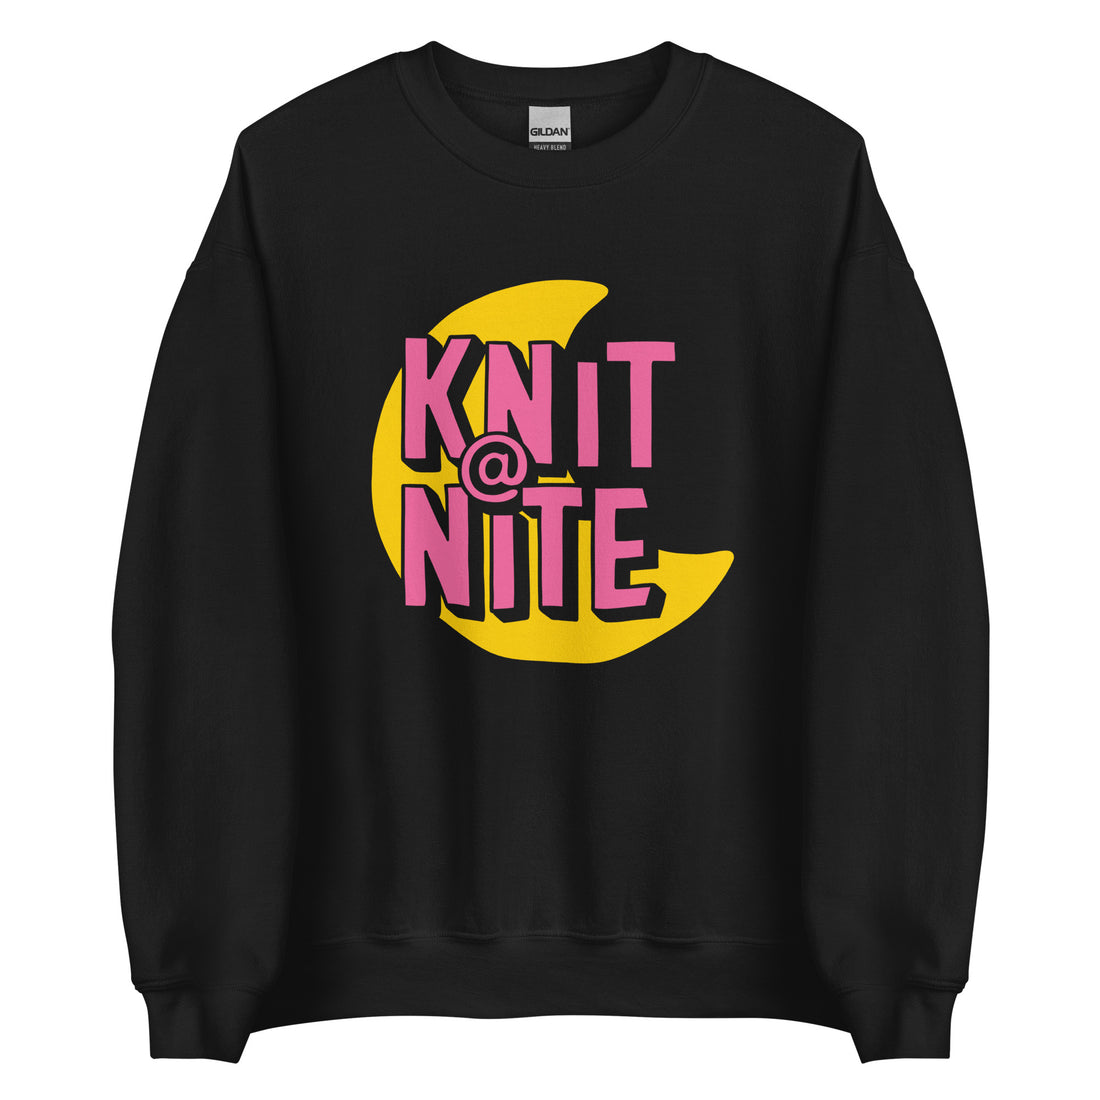 Knit @ Nite Sweatshirt